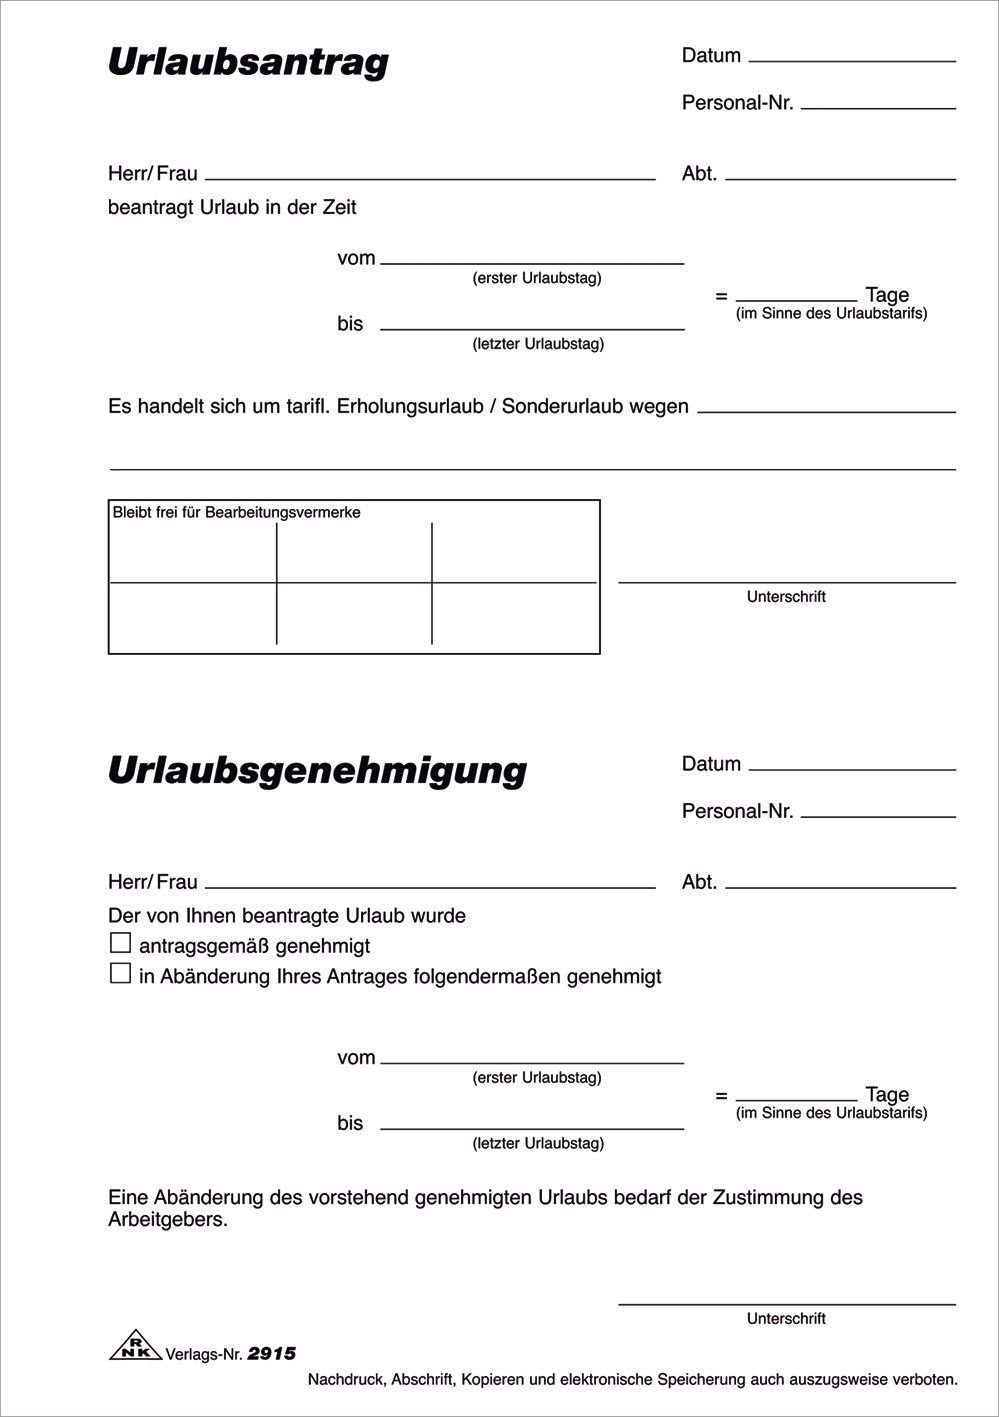 RNK Verlag Fotoalbum RNK Verlag Vordruck "Urlaubsantrag", Block, DIN A5